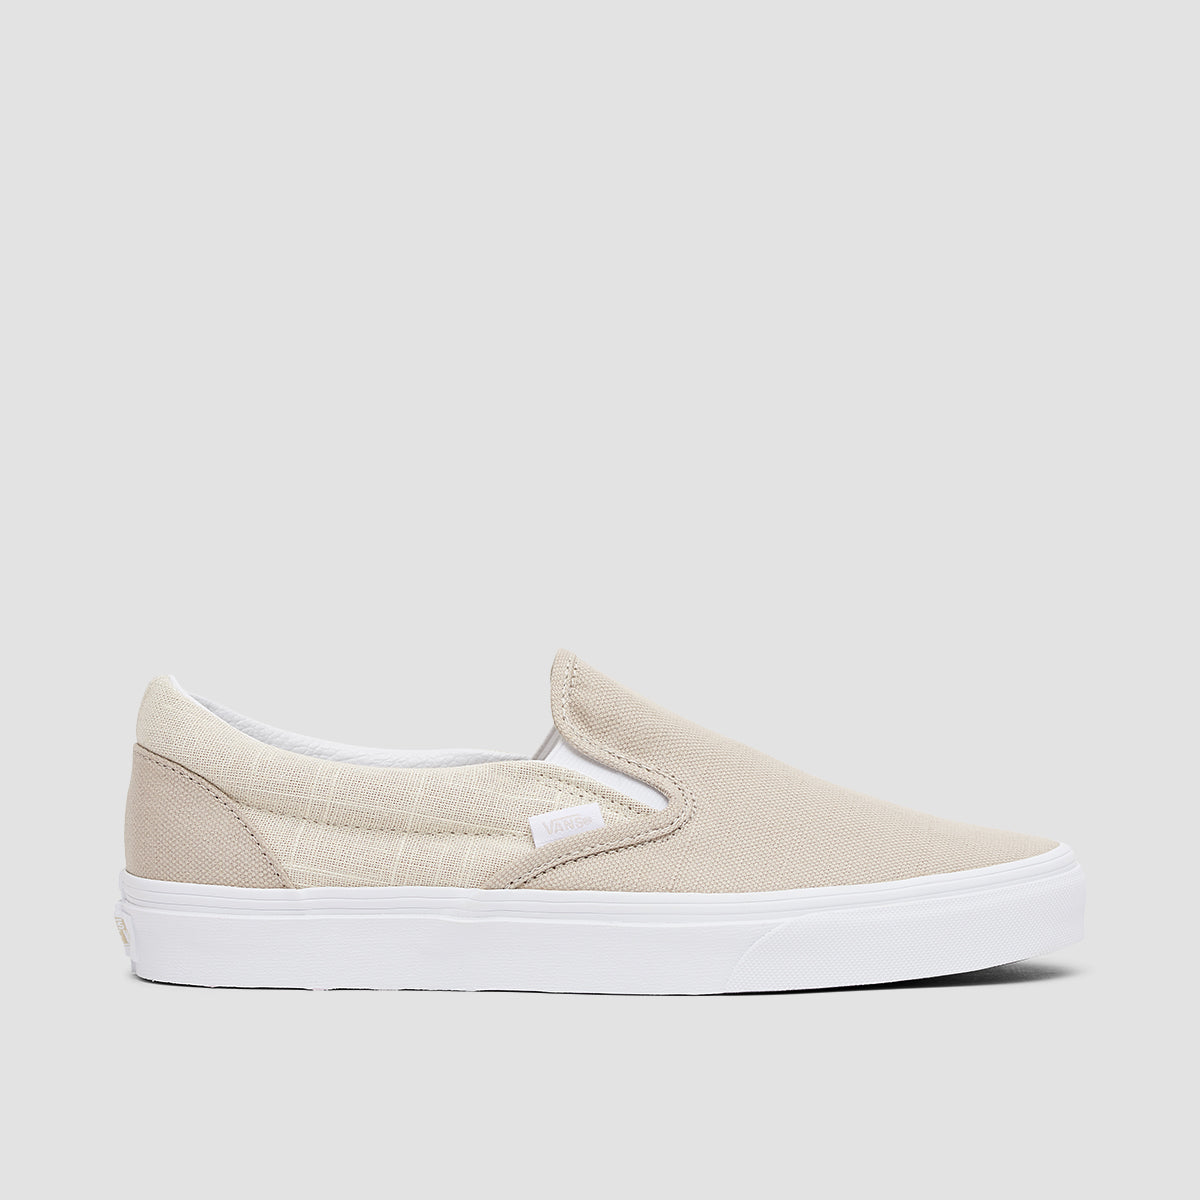 Vans Classic Slip-On Shoes - Summer Linen Natural